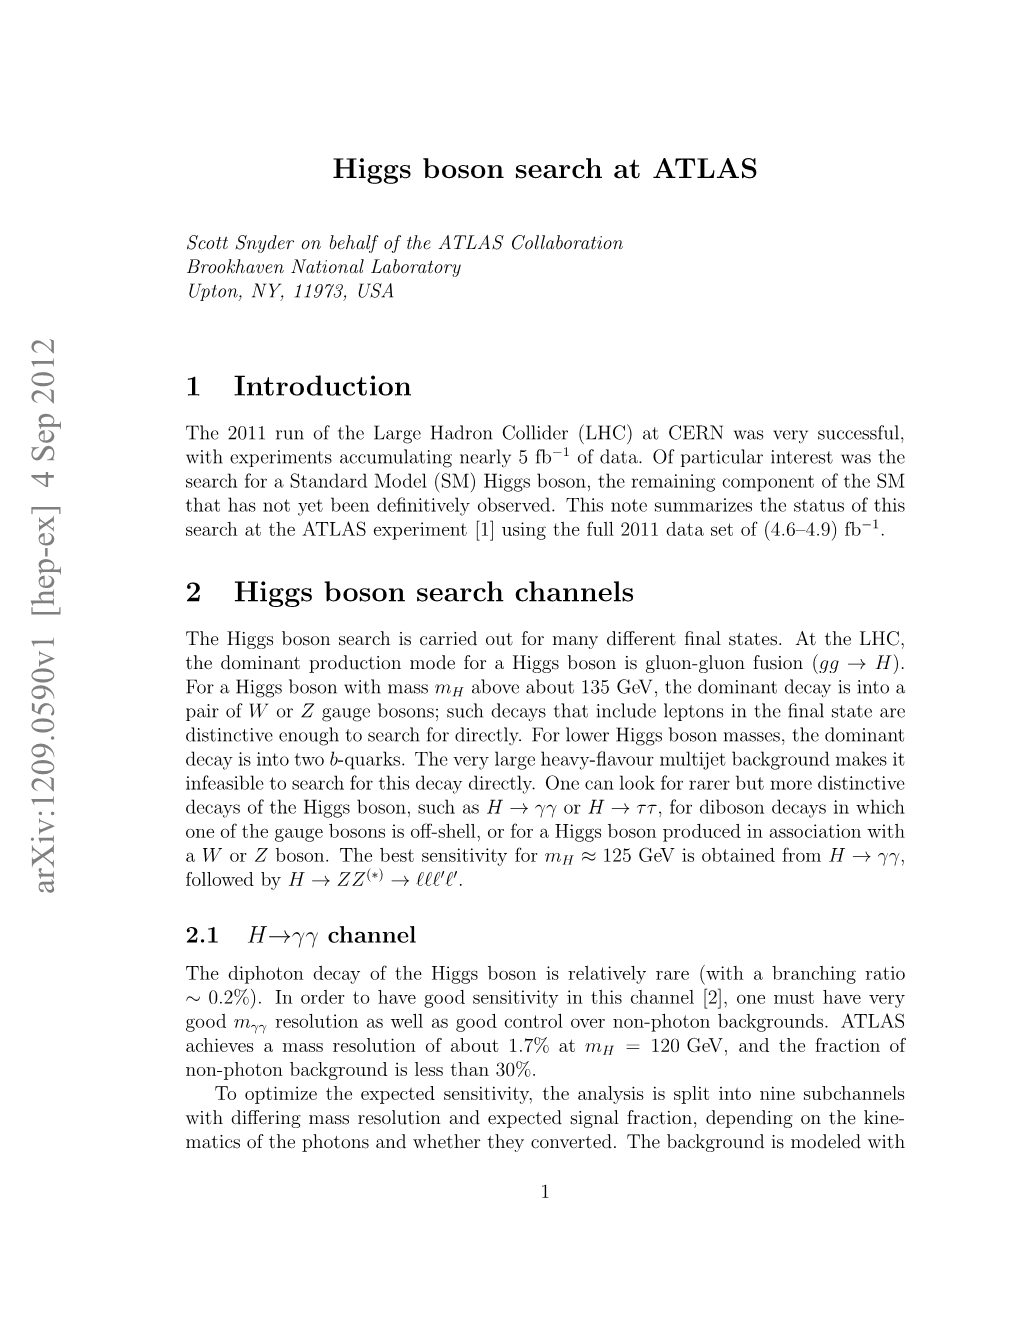 Higgs Boson Search at ATLAS